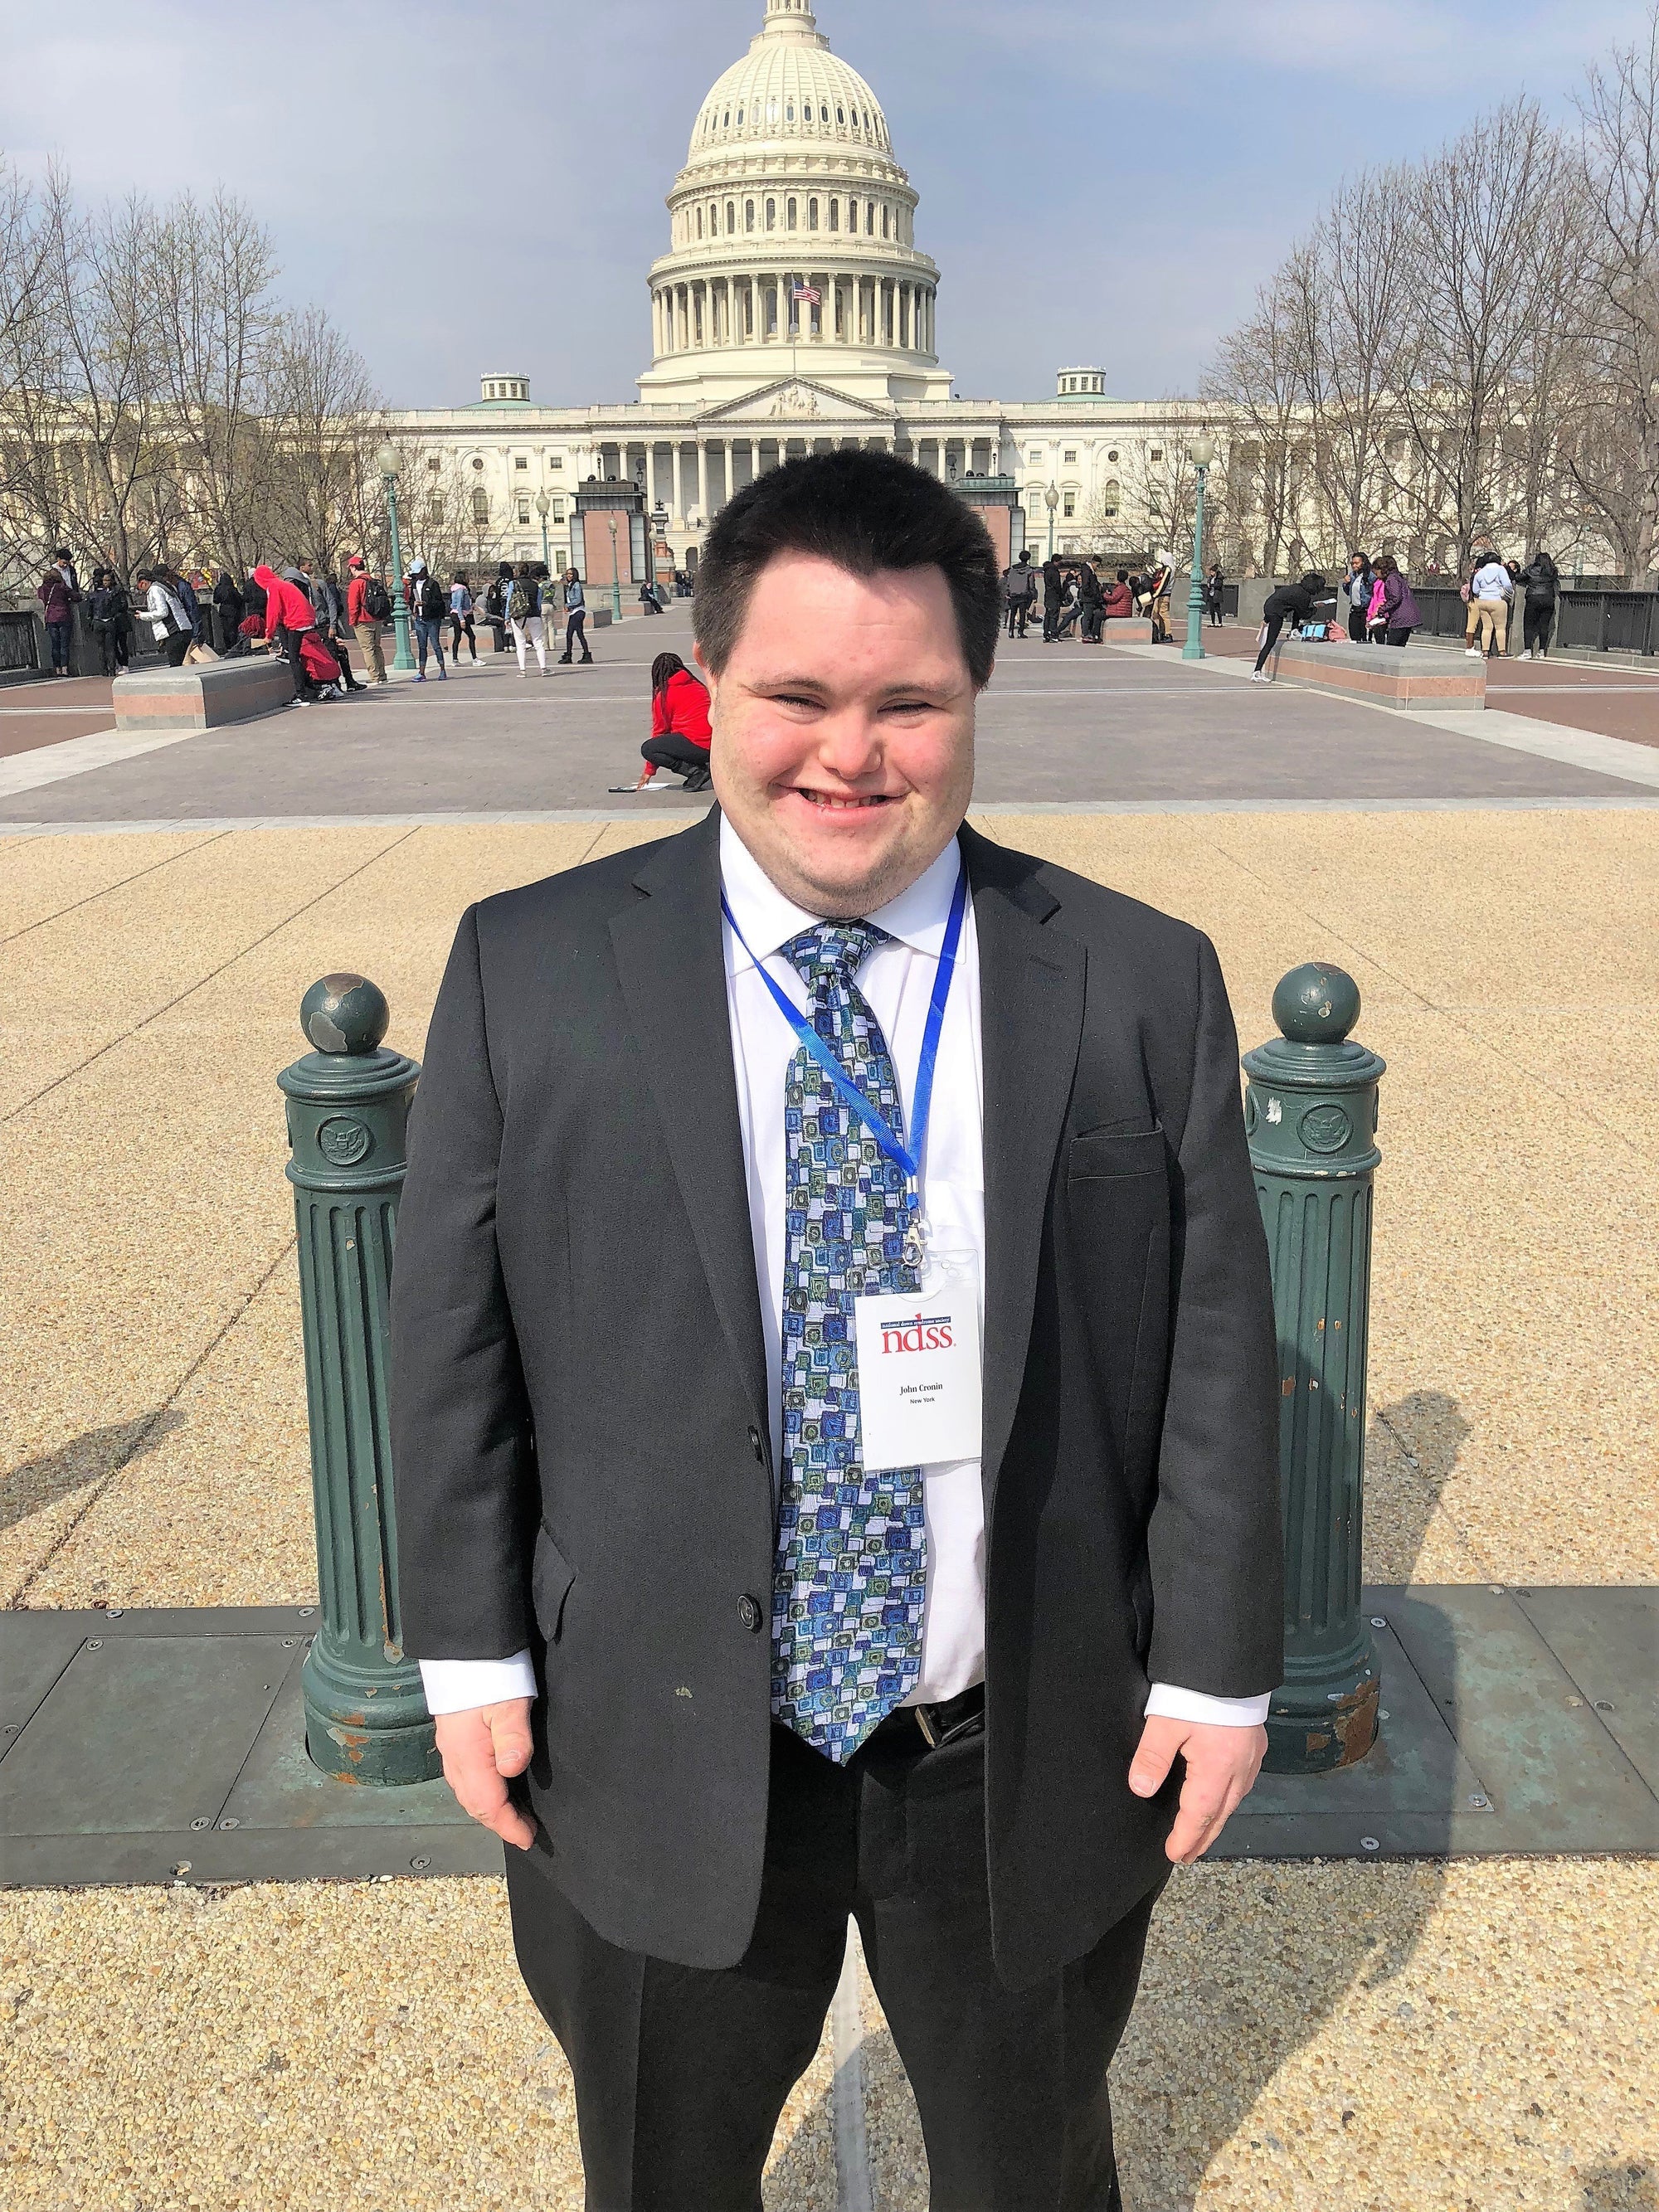 Down Syndrome Entrepreneur John Cronin to Speak at Congressional Hearing on Hiring People with Developmental Disabilities